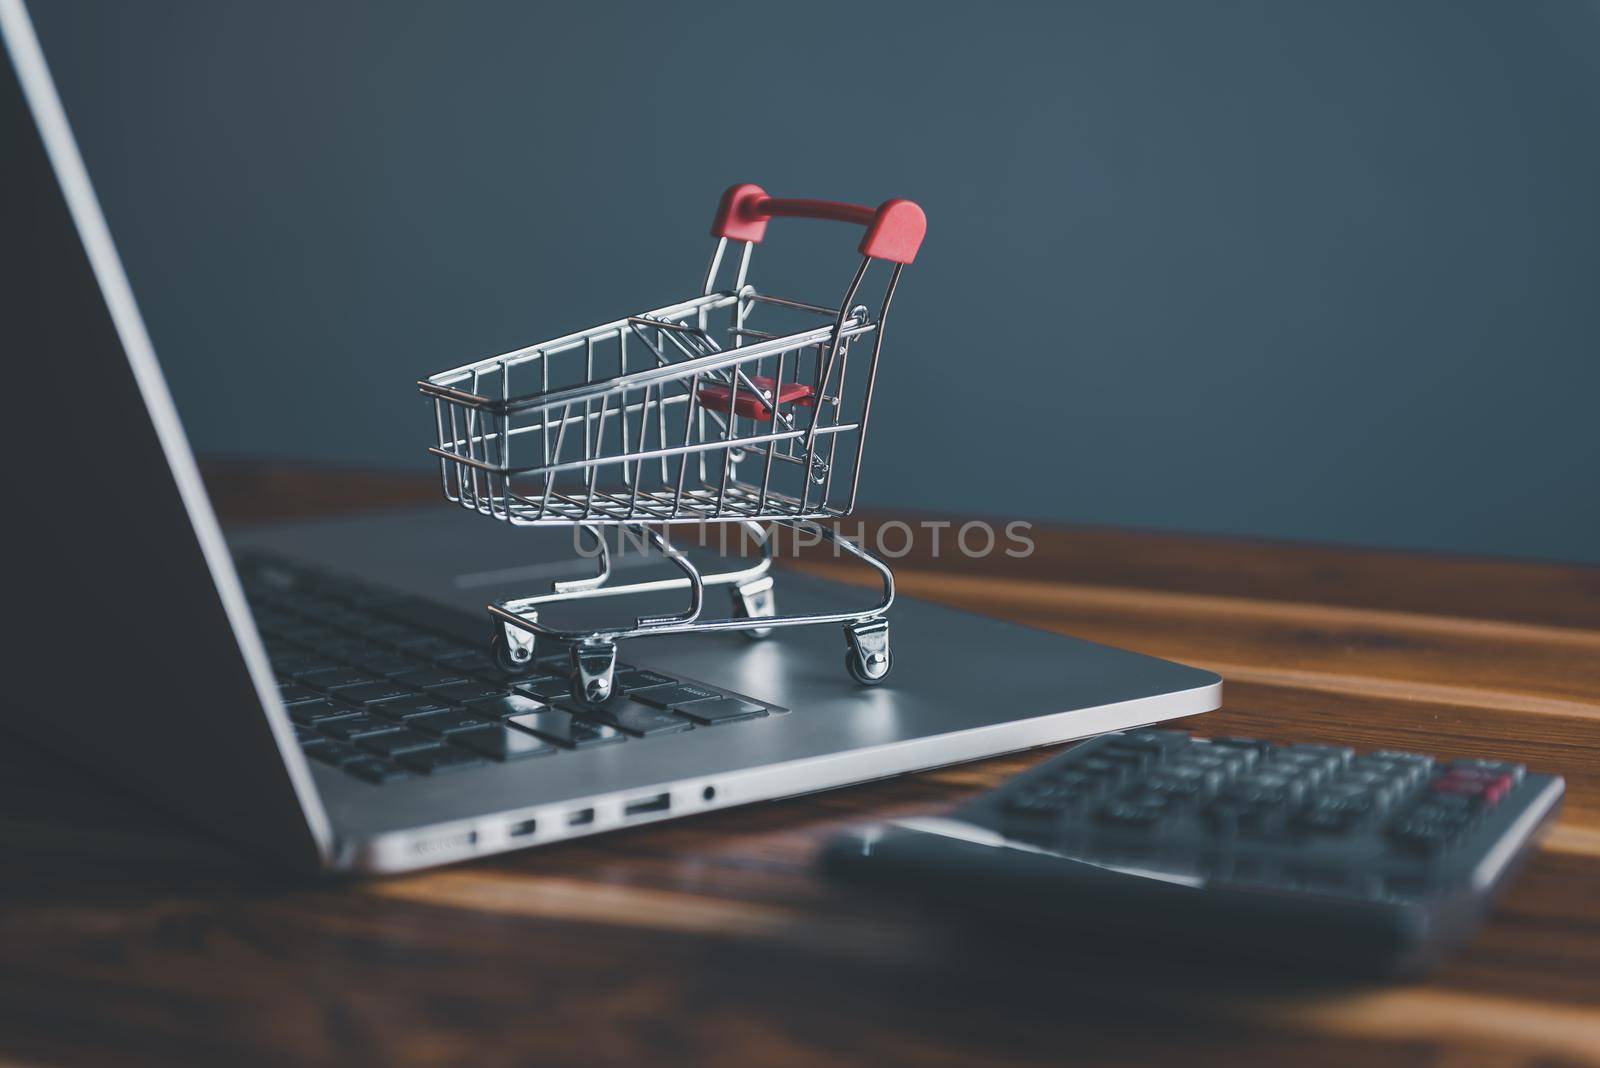 Mini Shopping Cart on Computer Laptop for Market E-Commerce Advertisement Concepts. Market E-commerce, Online Shopping Concept, Business Marketing Ecommerce Via Online Network.